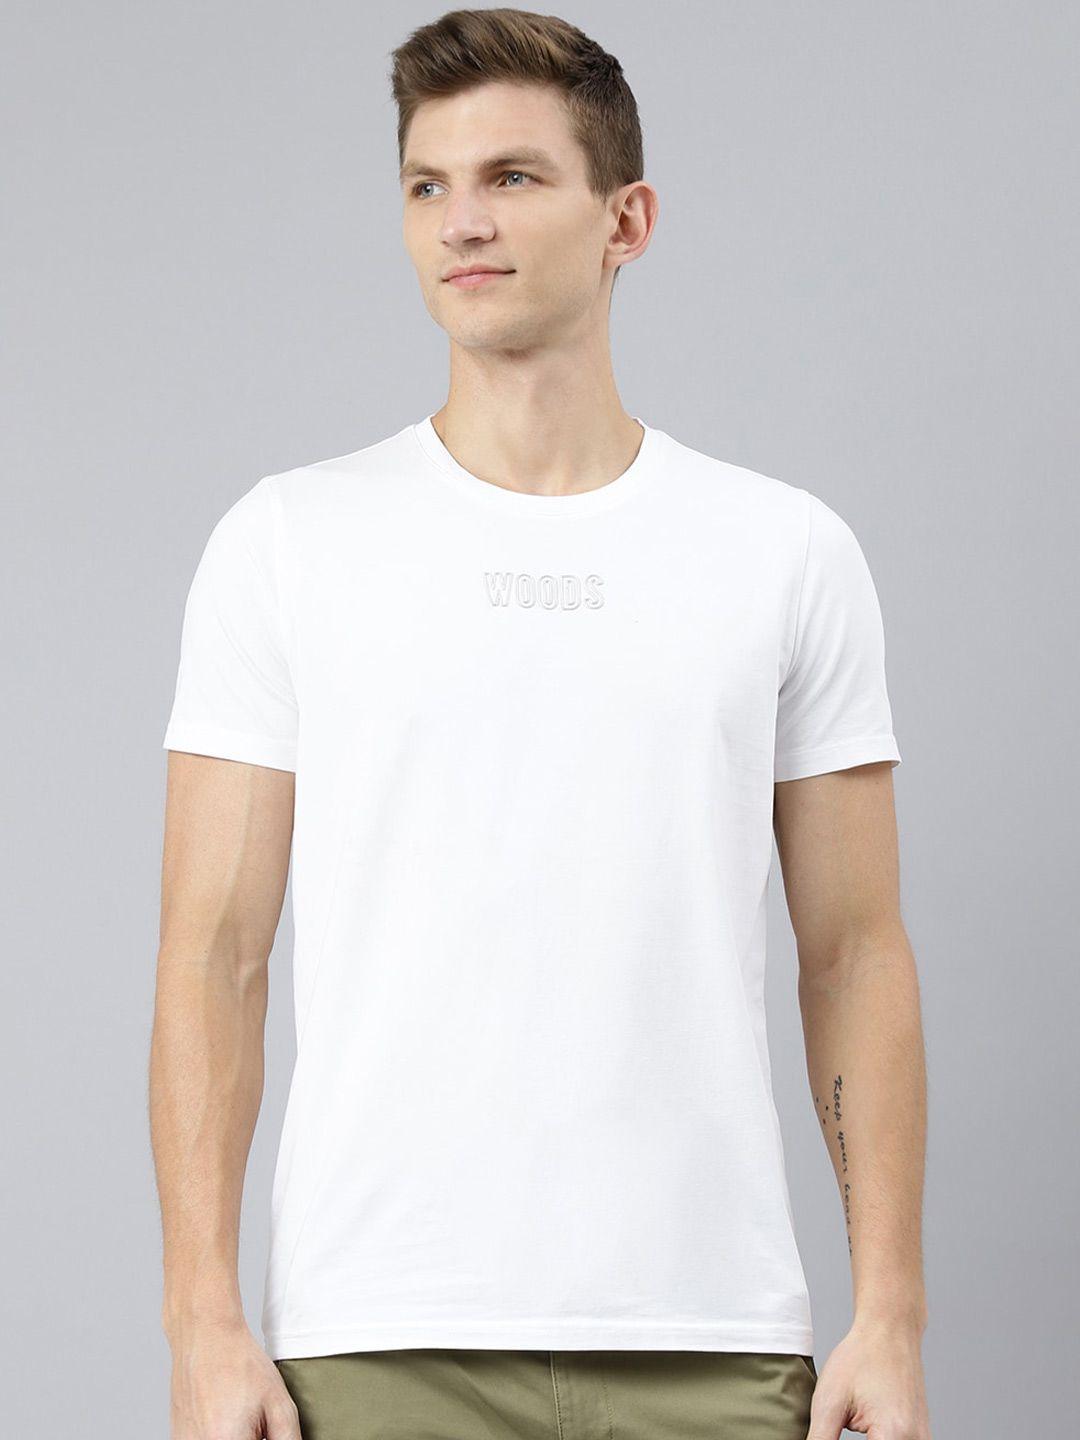 woods-men-white-typography-t-shirt